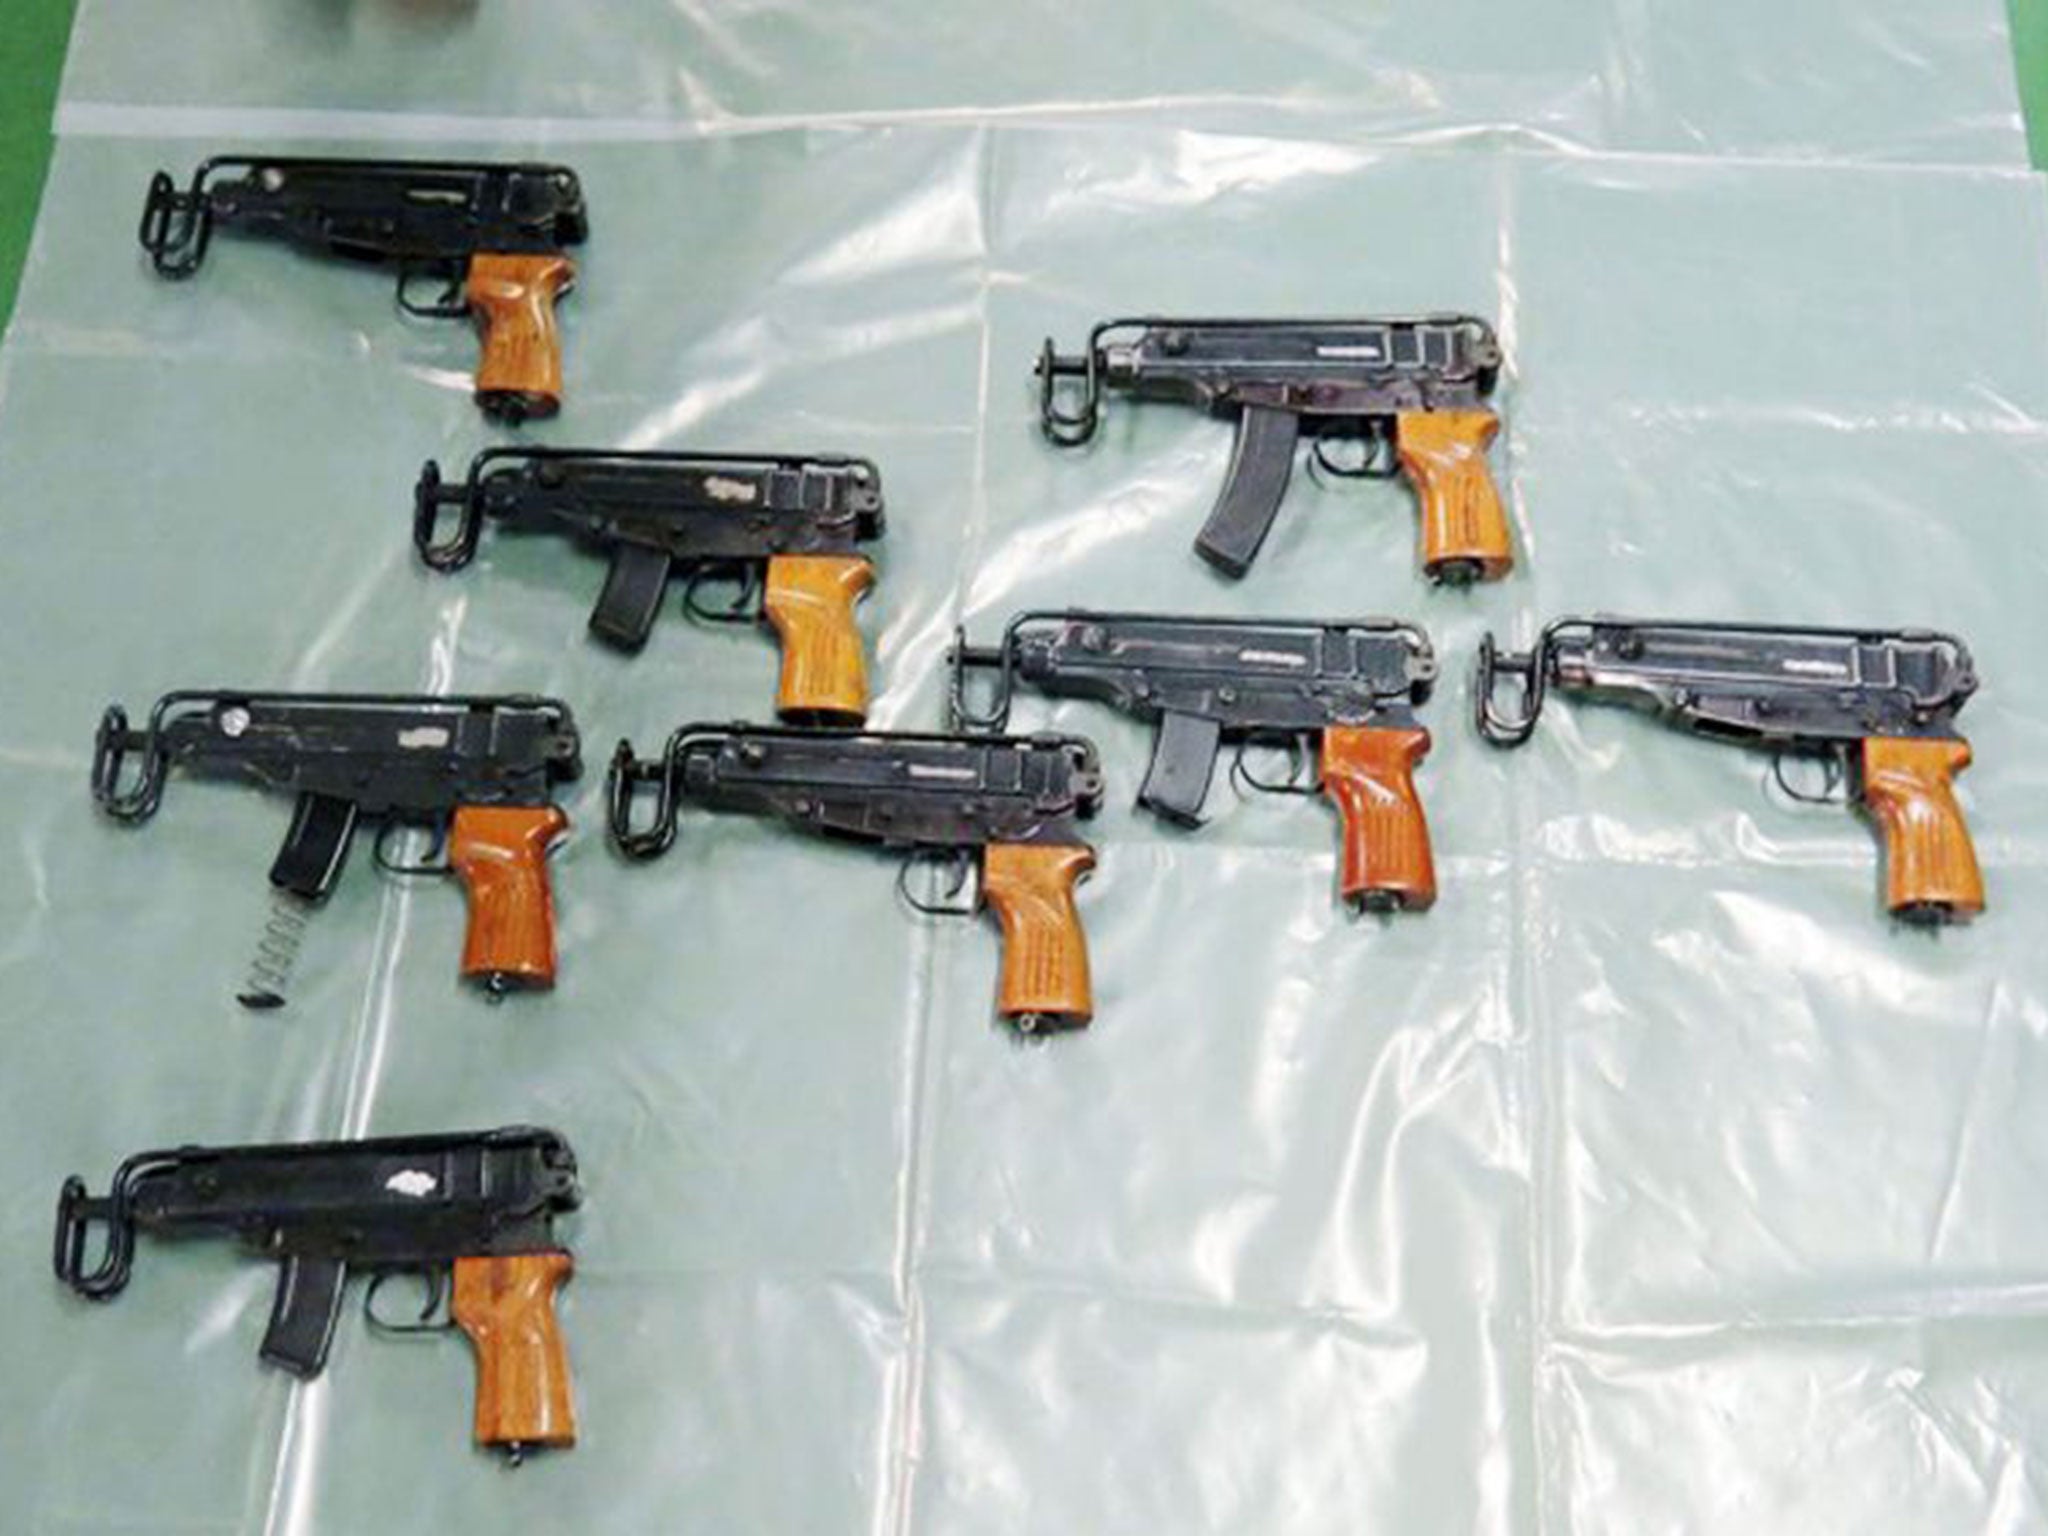 Skorpion machine pistols allegedly smuggled into a Kent marina last summer